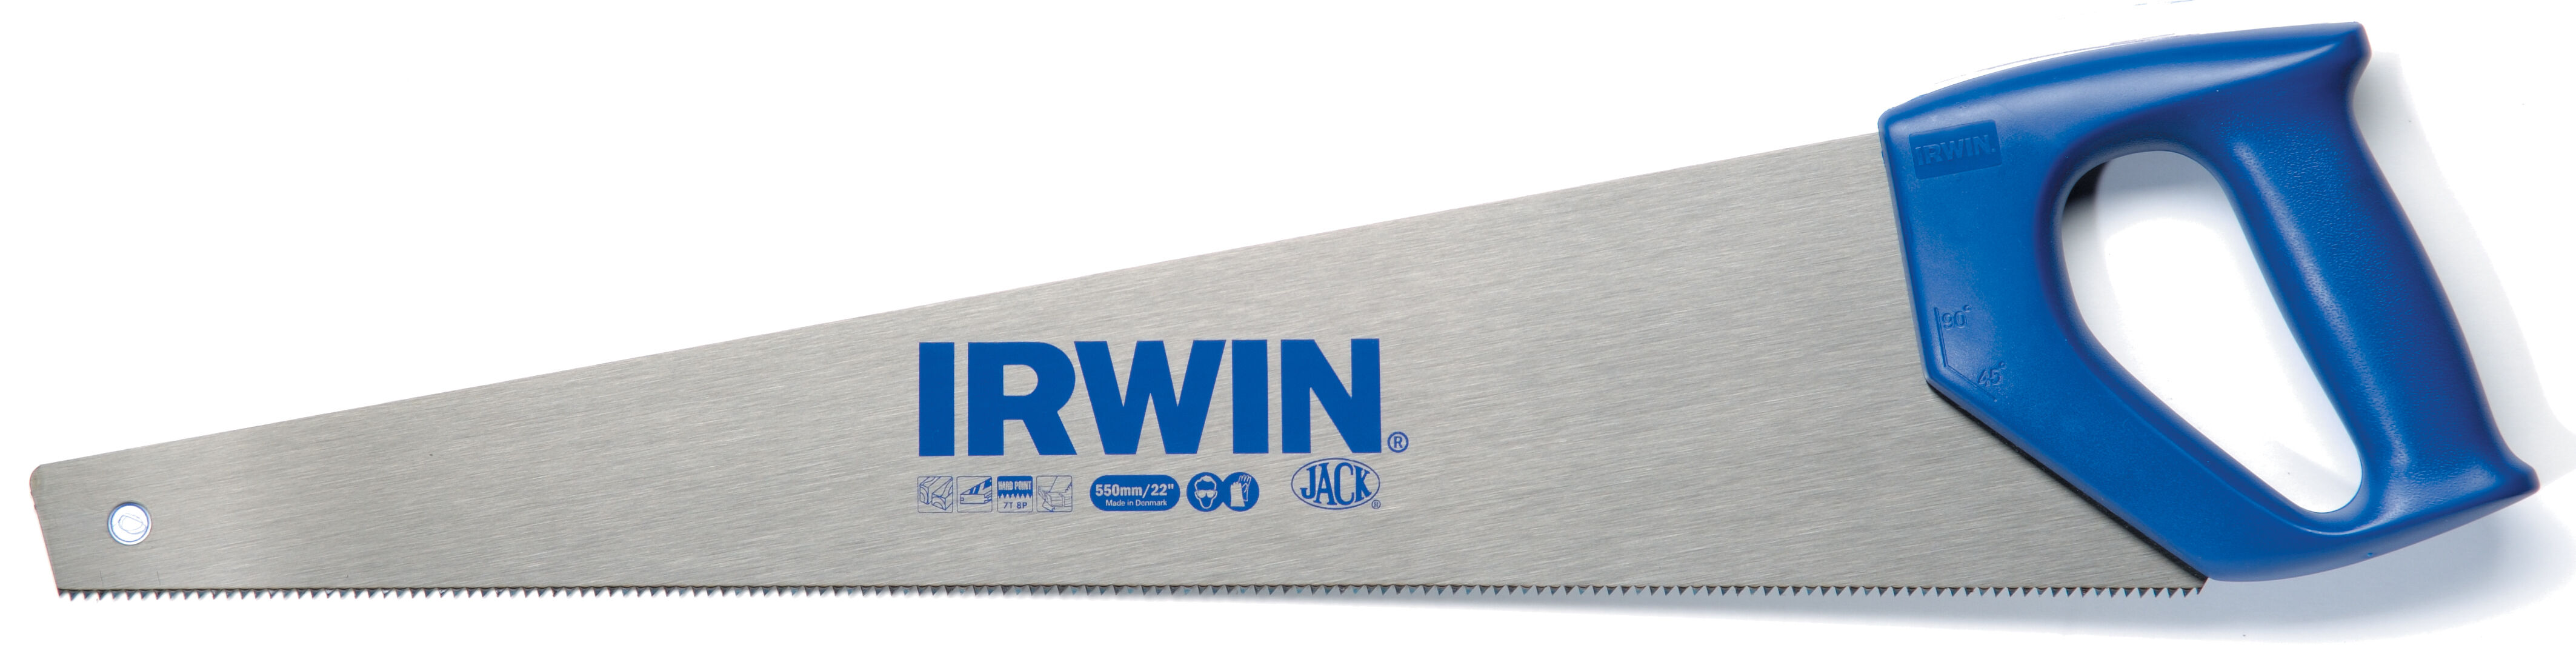 Irwin Standaard universele handzaag 550 mm 7T/8P